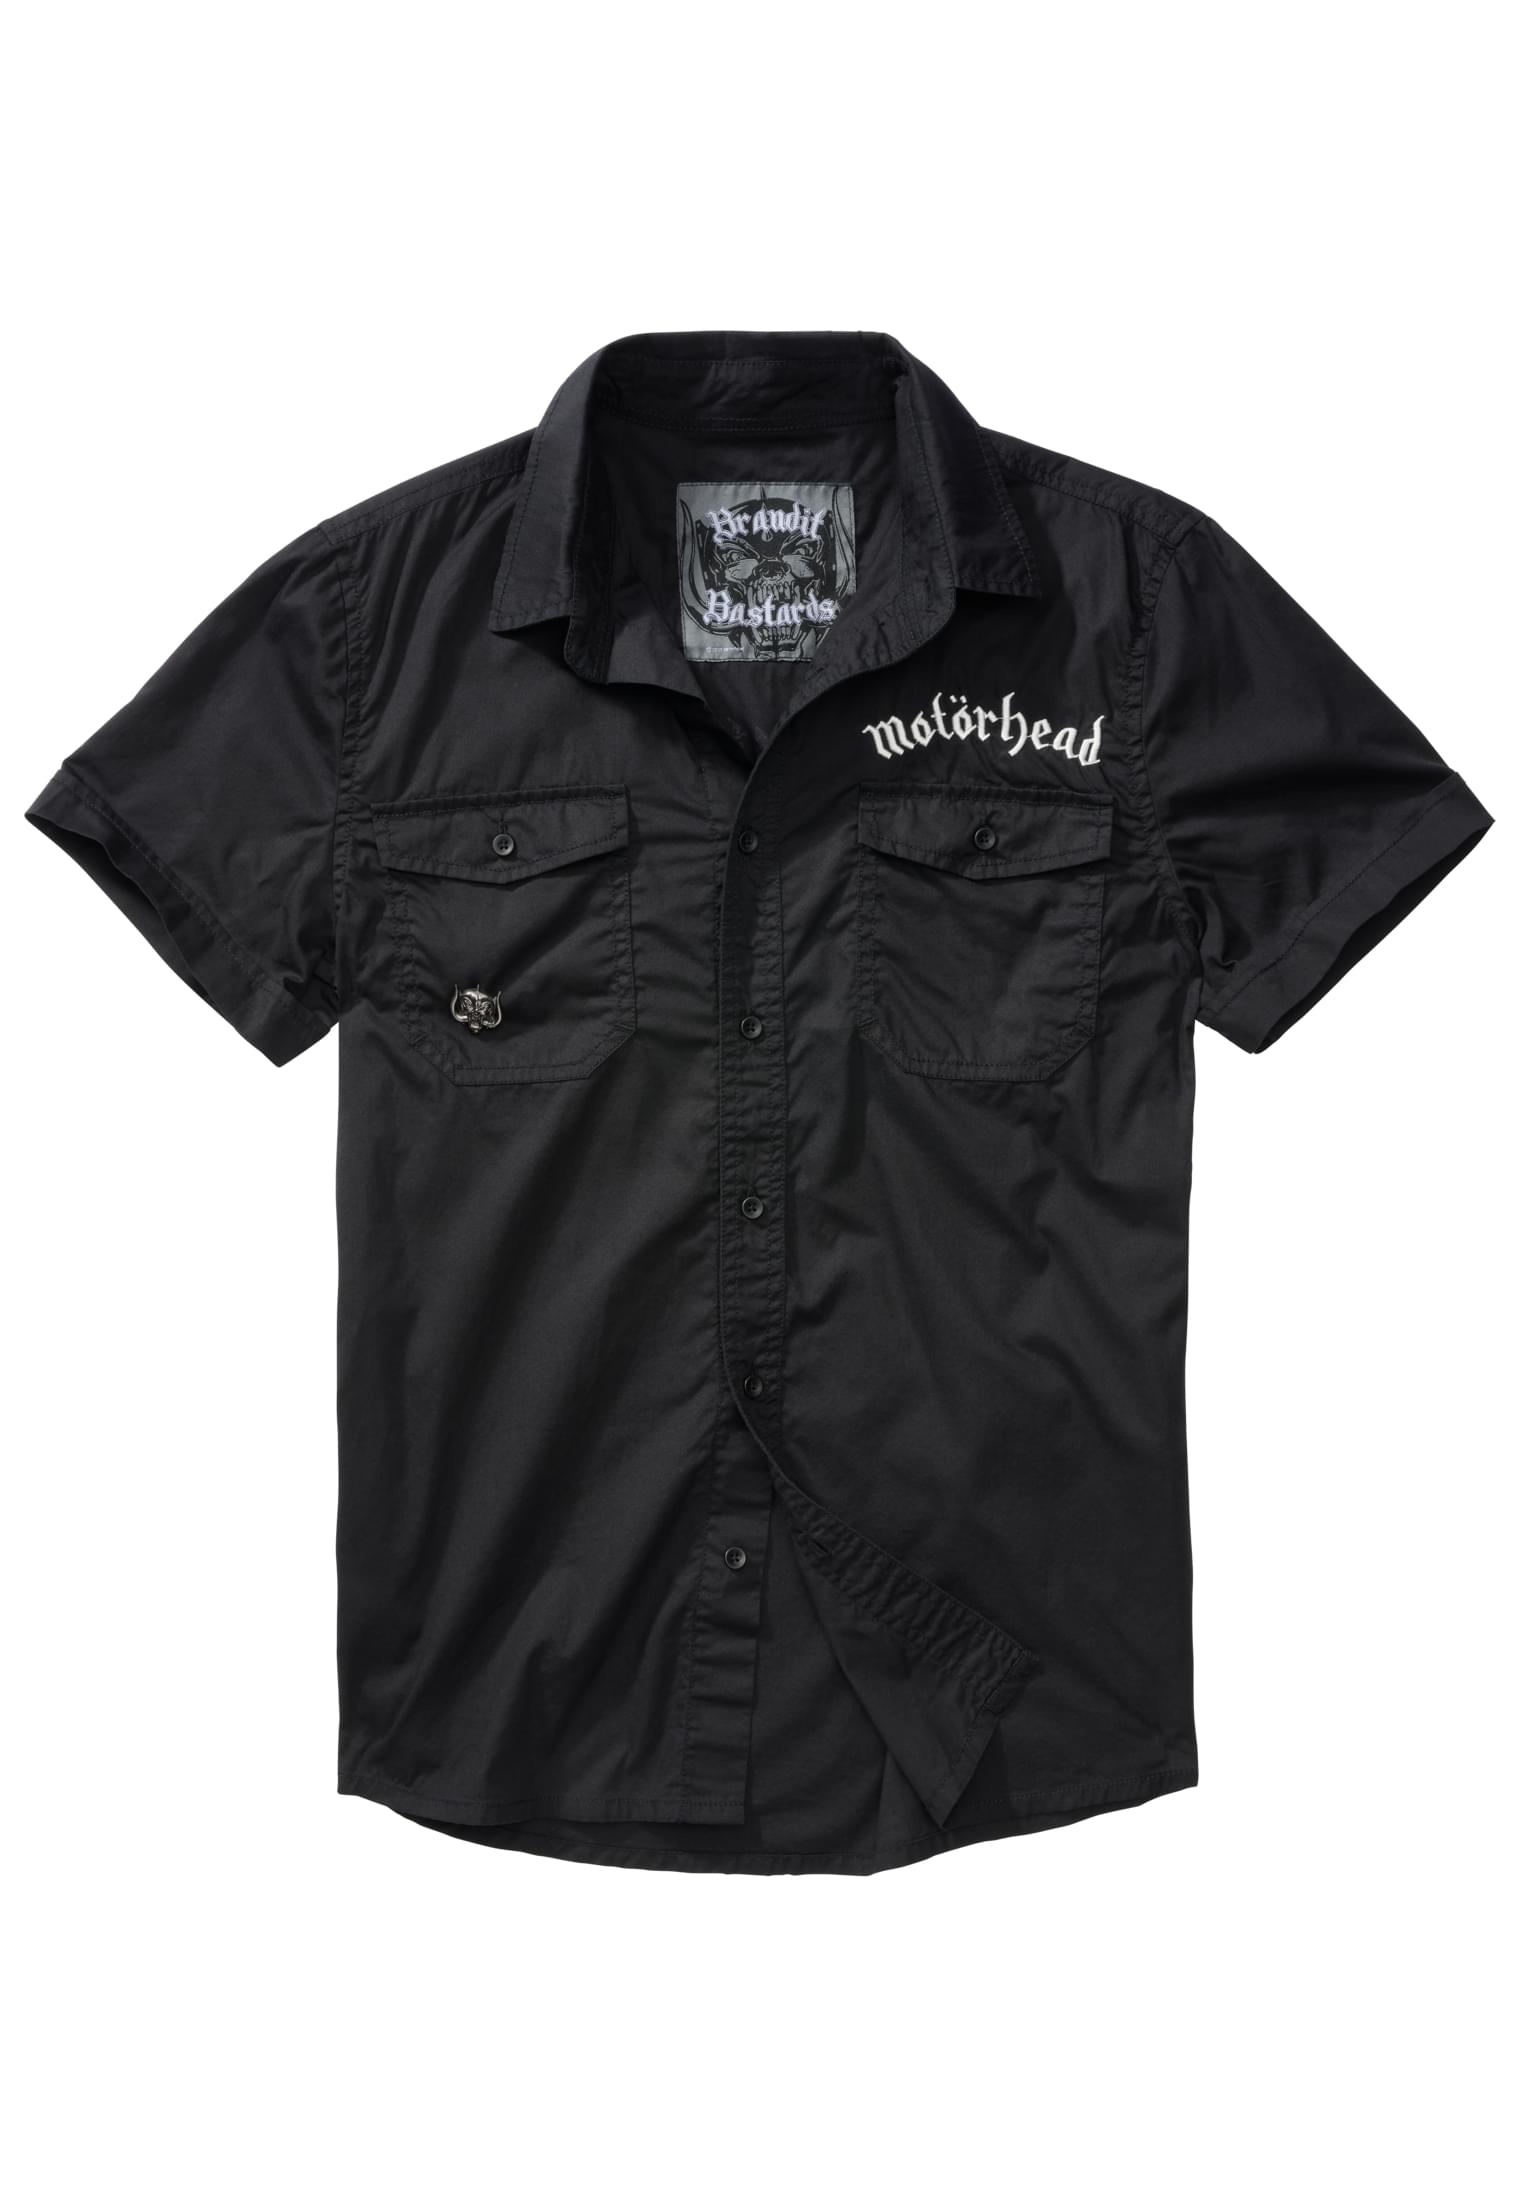 Motörhead Black Shirt